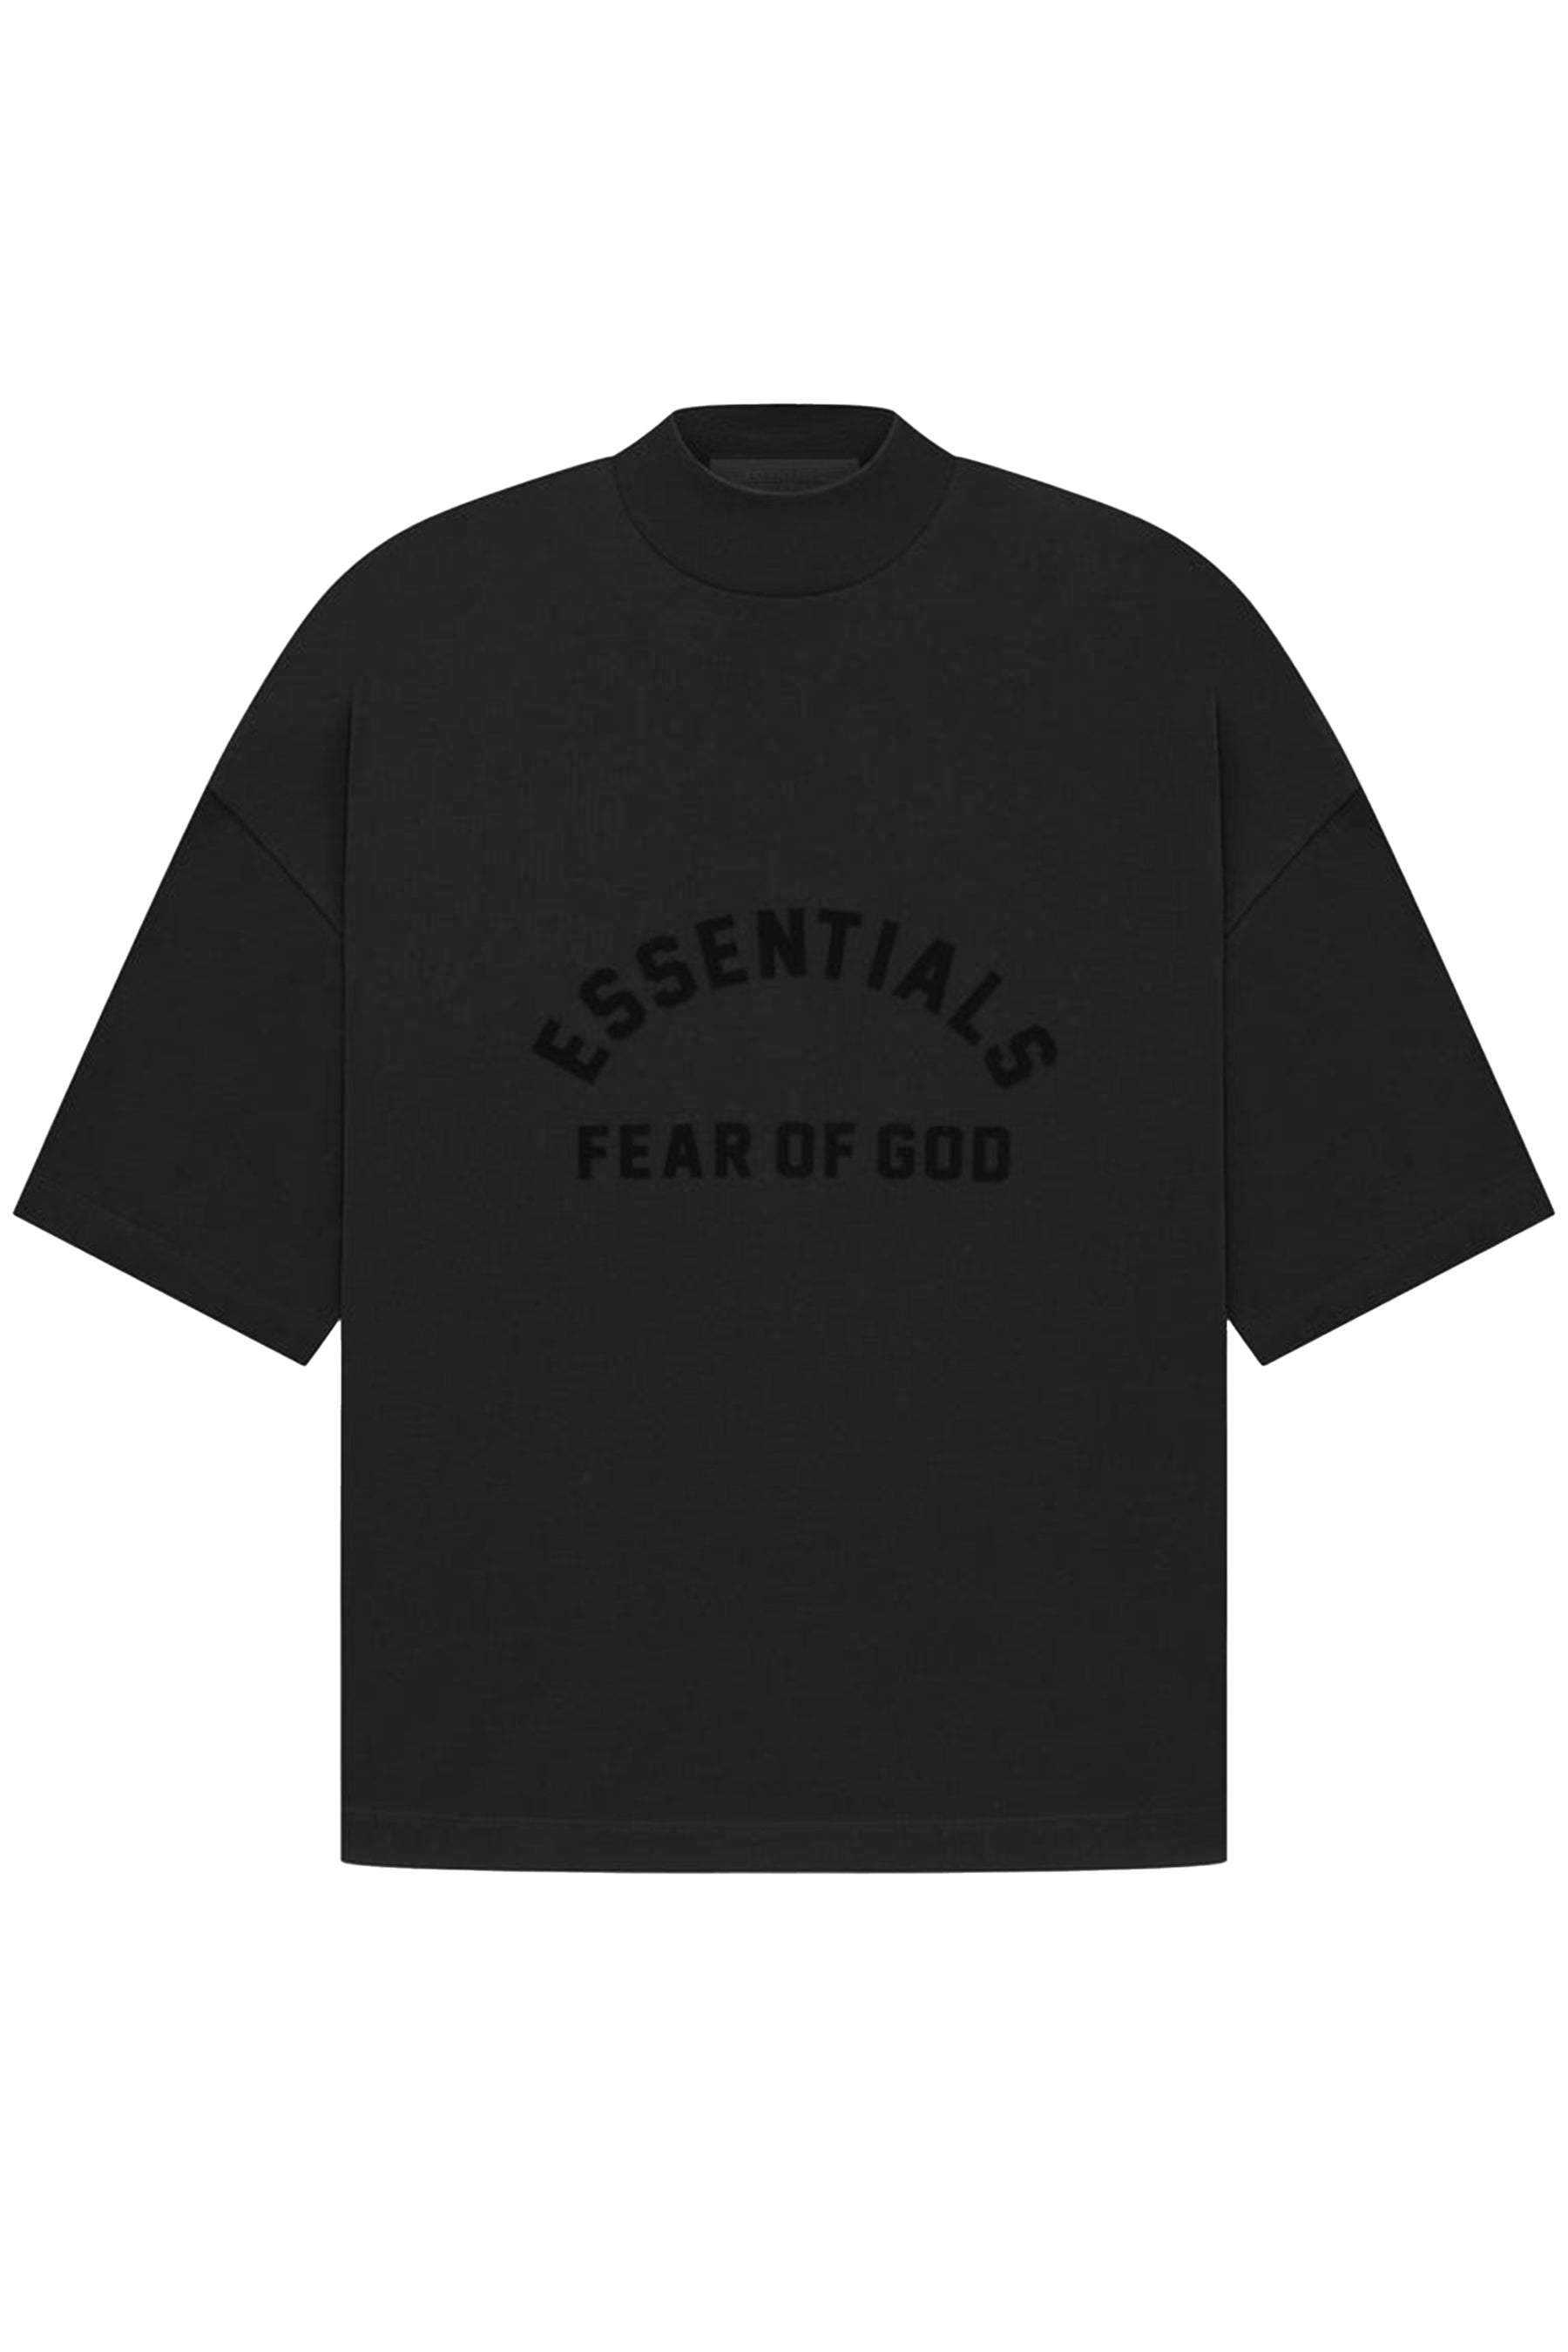 ESSENTIALS  fear of god tシャツ